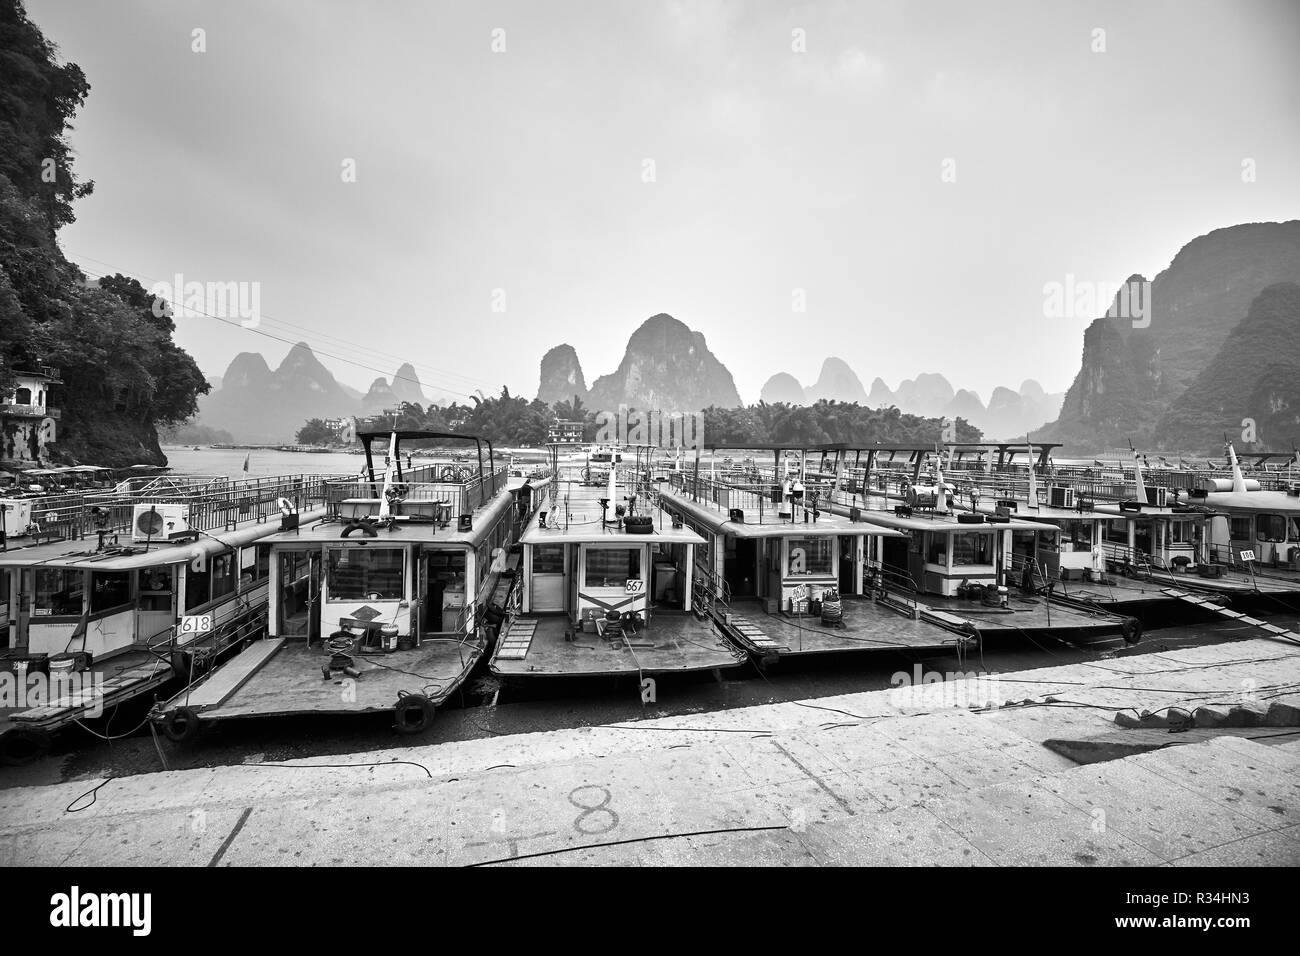 Xingping, Guangxi, China - 18. September 2017: Boote auf dem Fluss Lijiang Bank vertäut. Stockfoto